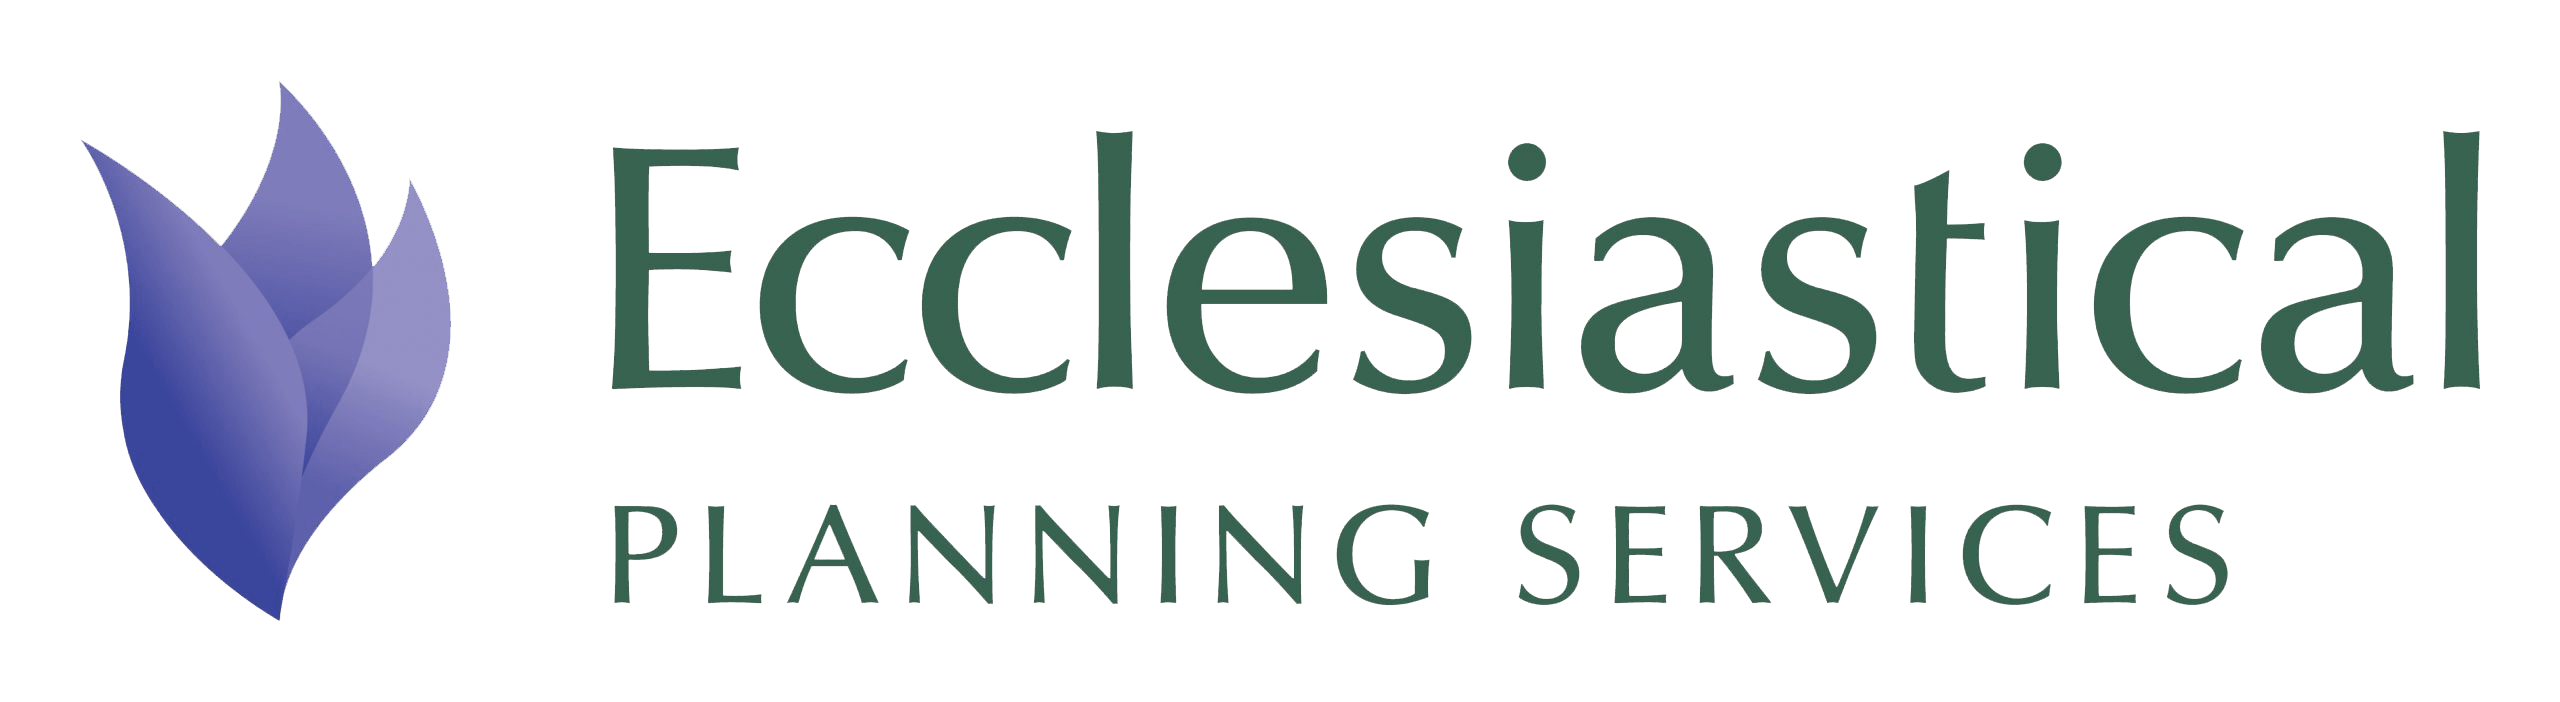 Ecclesiastical Planning Services logo